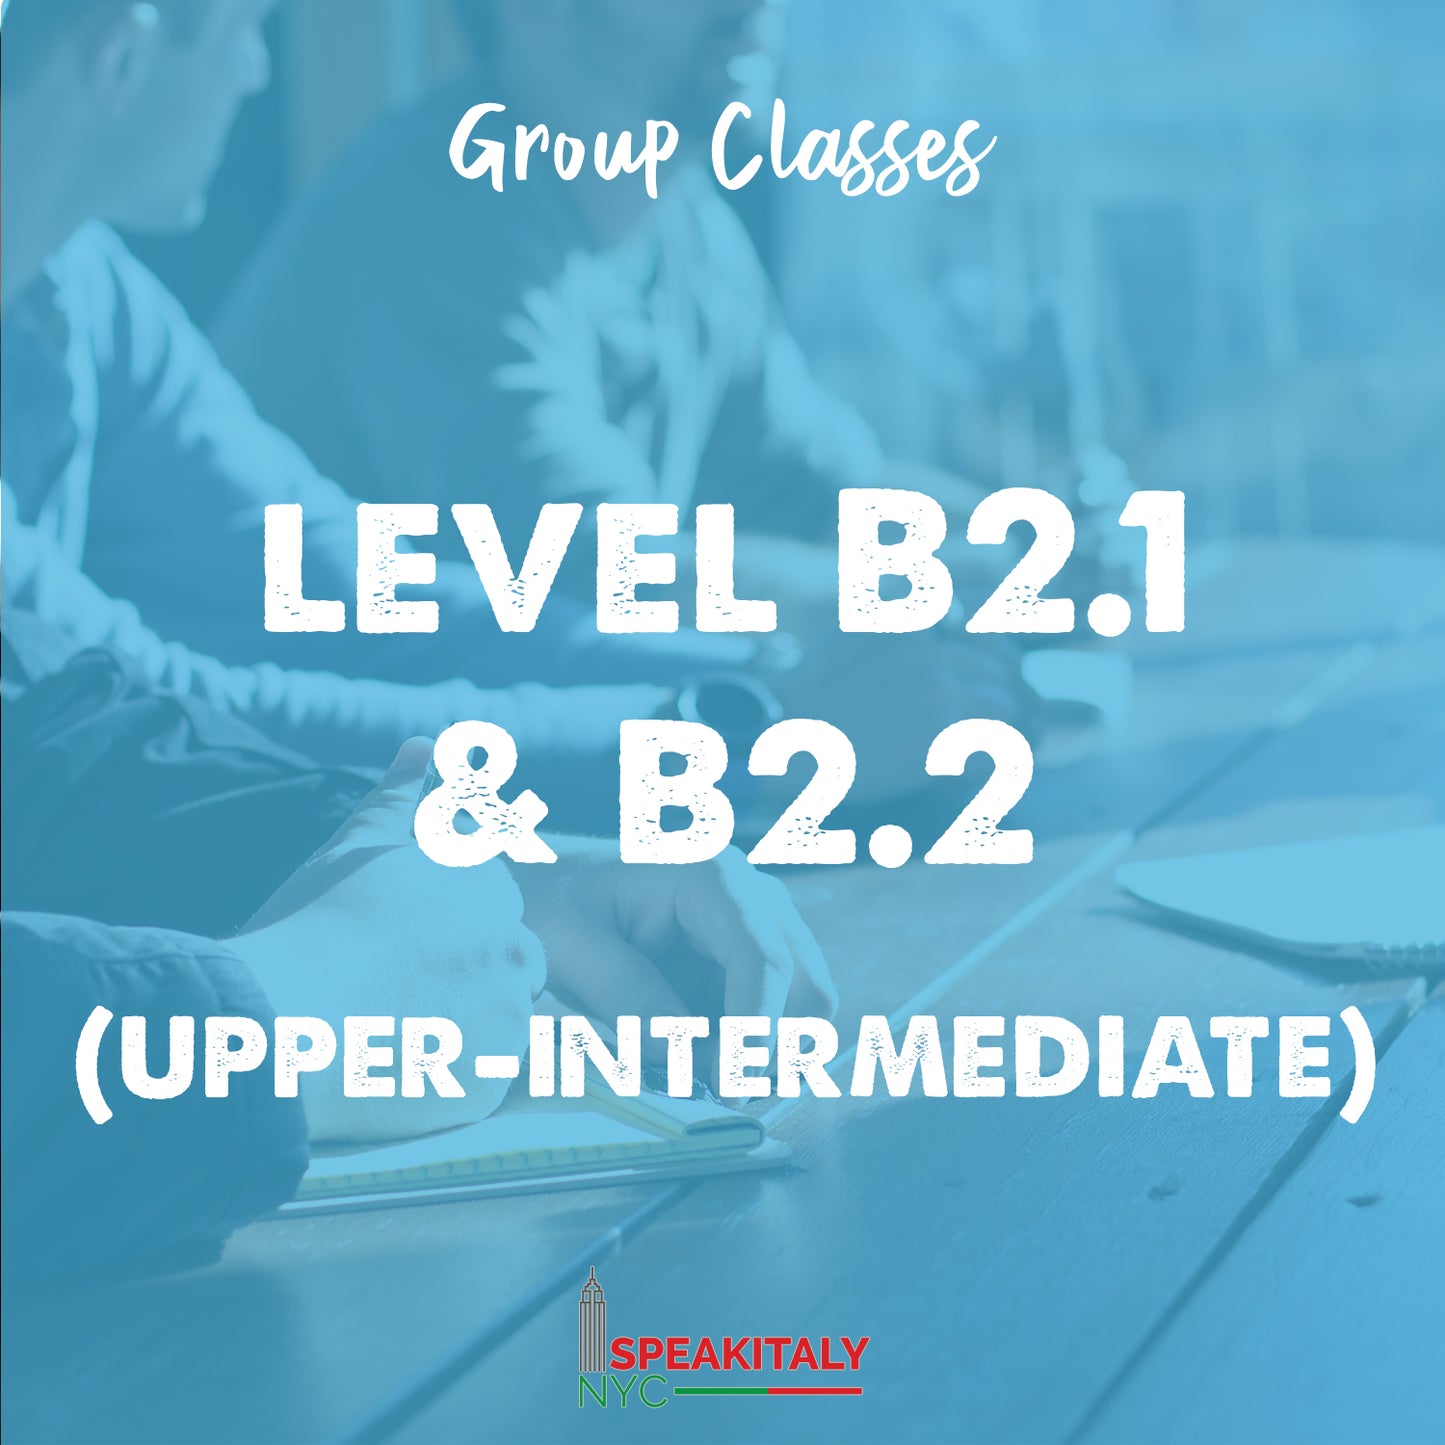 Group Classes - Level B2.1 & B2.2 (Upper Intermediate) - IN PERSON- BROOKLYN